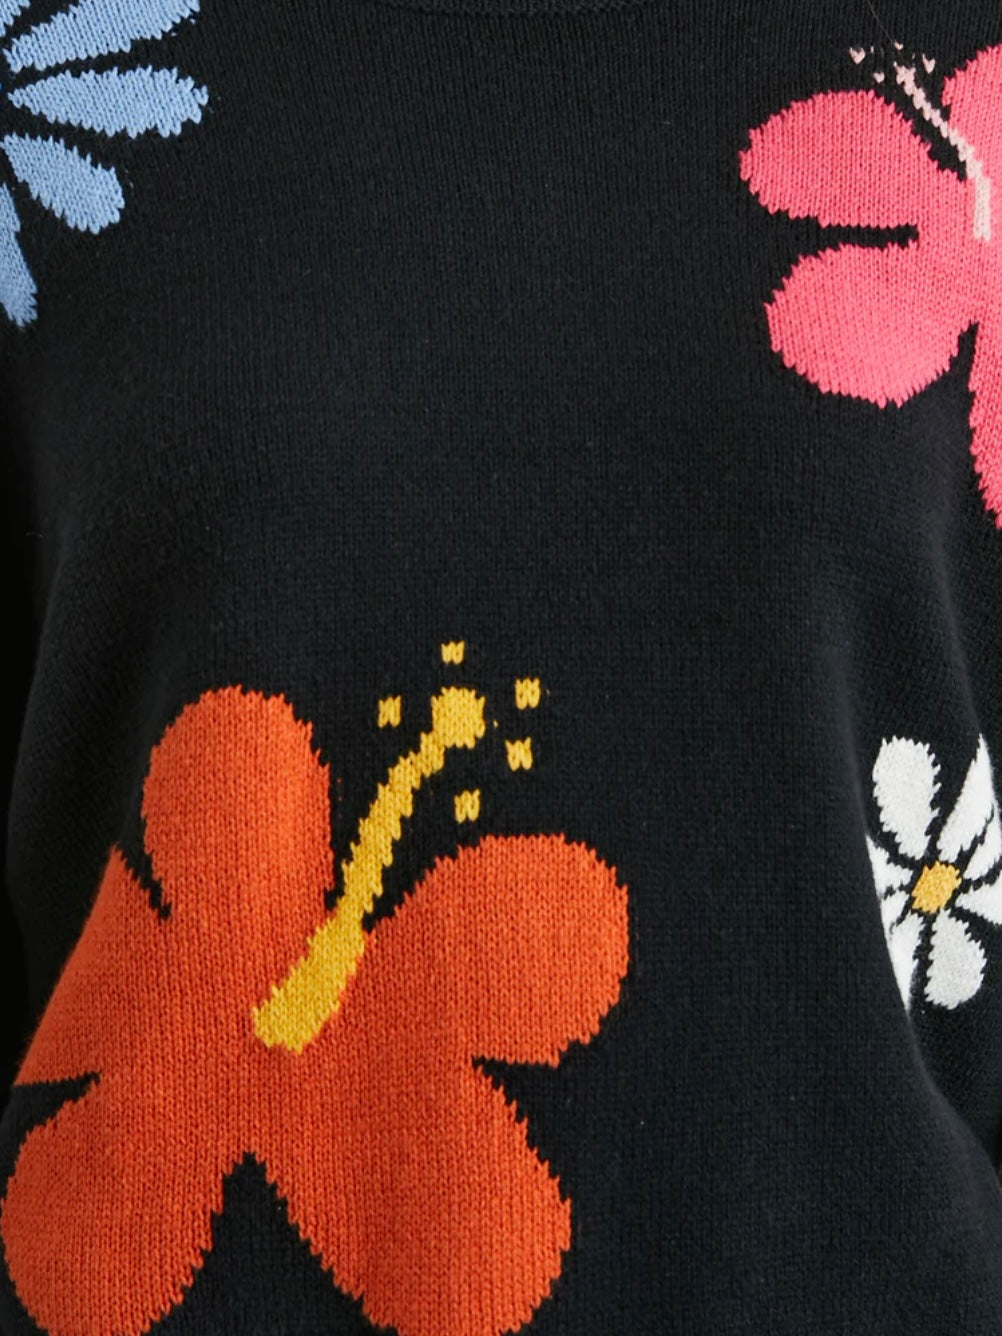 Rails Zoey Sweater in Hibiscus Multi